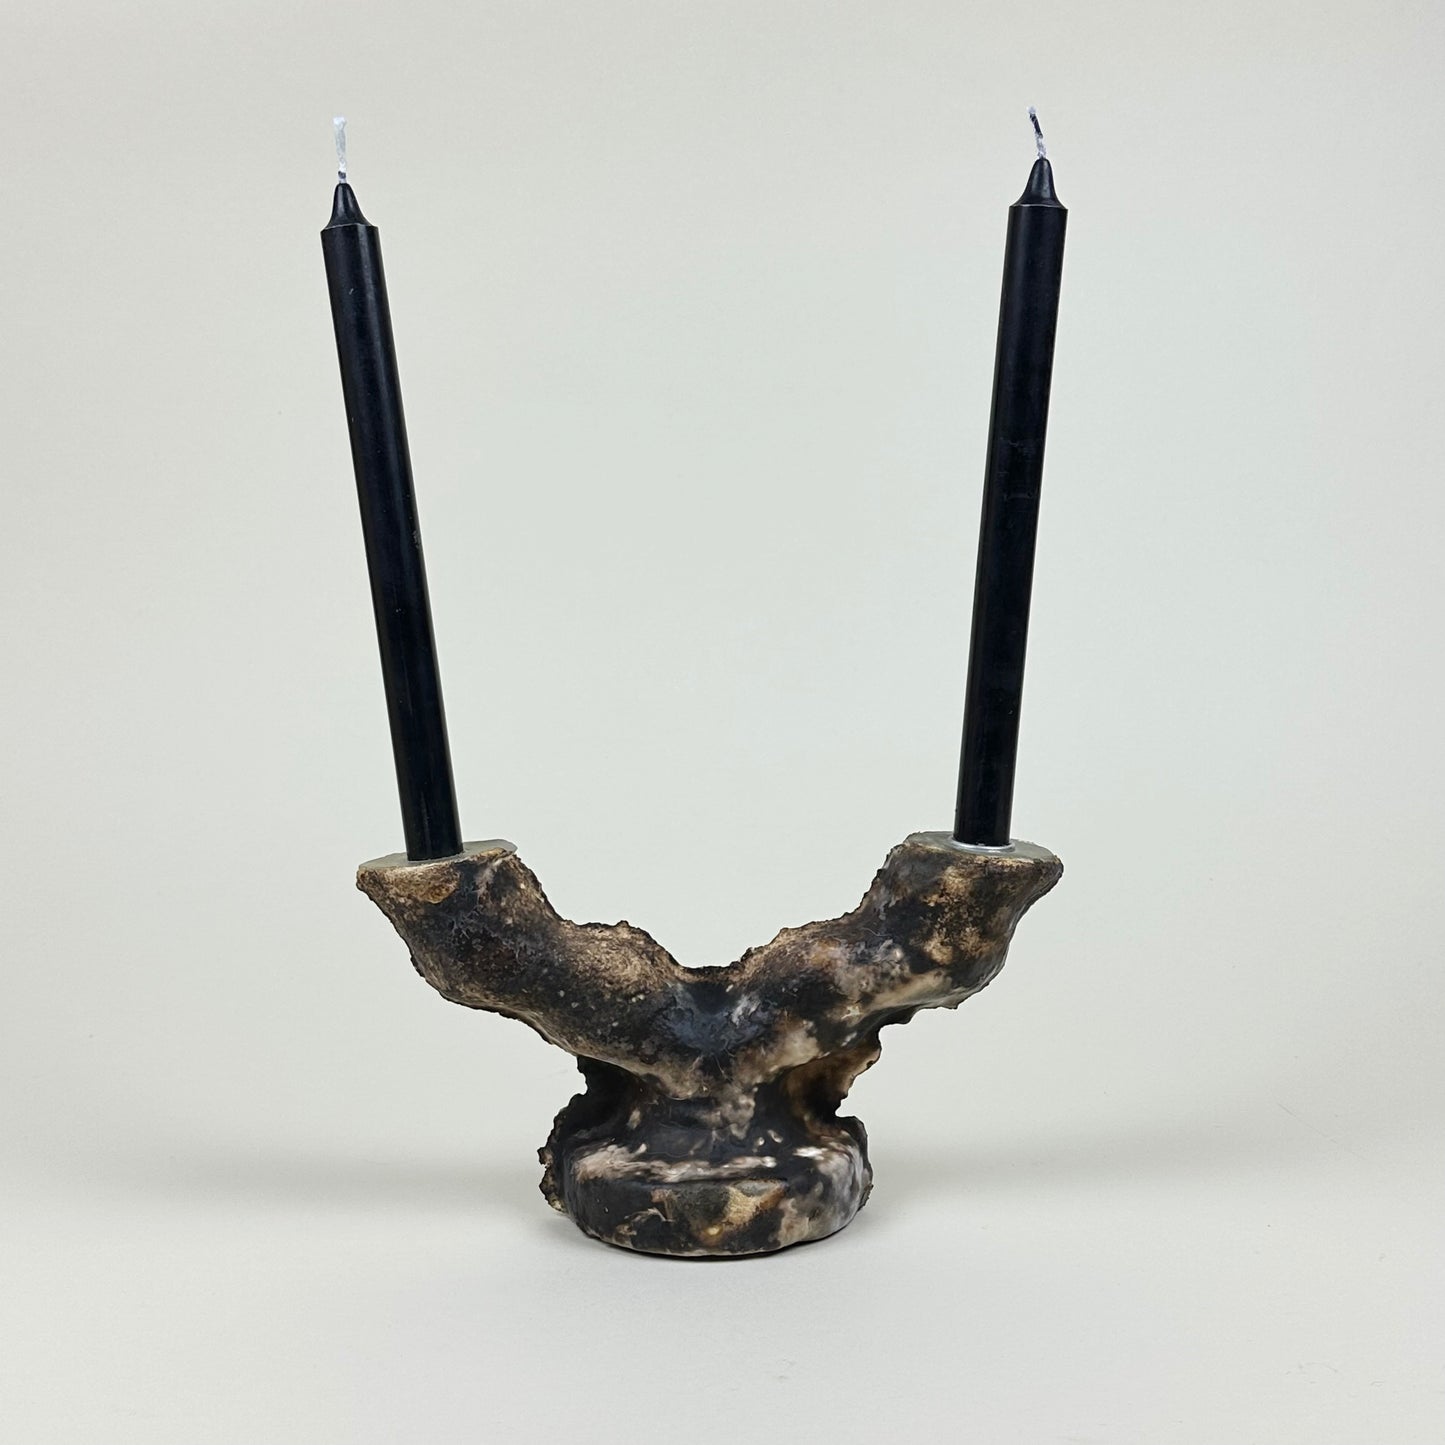 Mycelium big char candle holder by Maria Pita Guerreiro